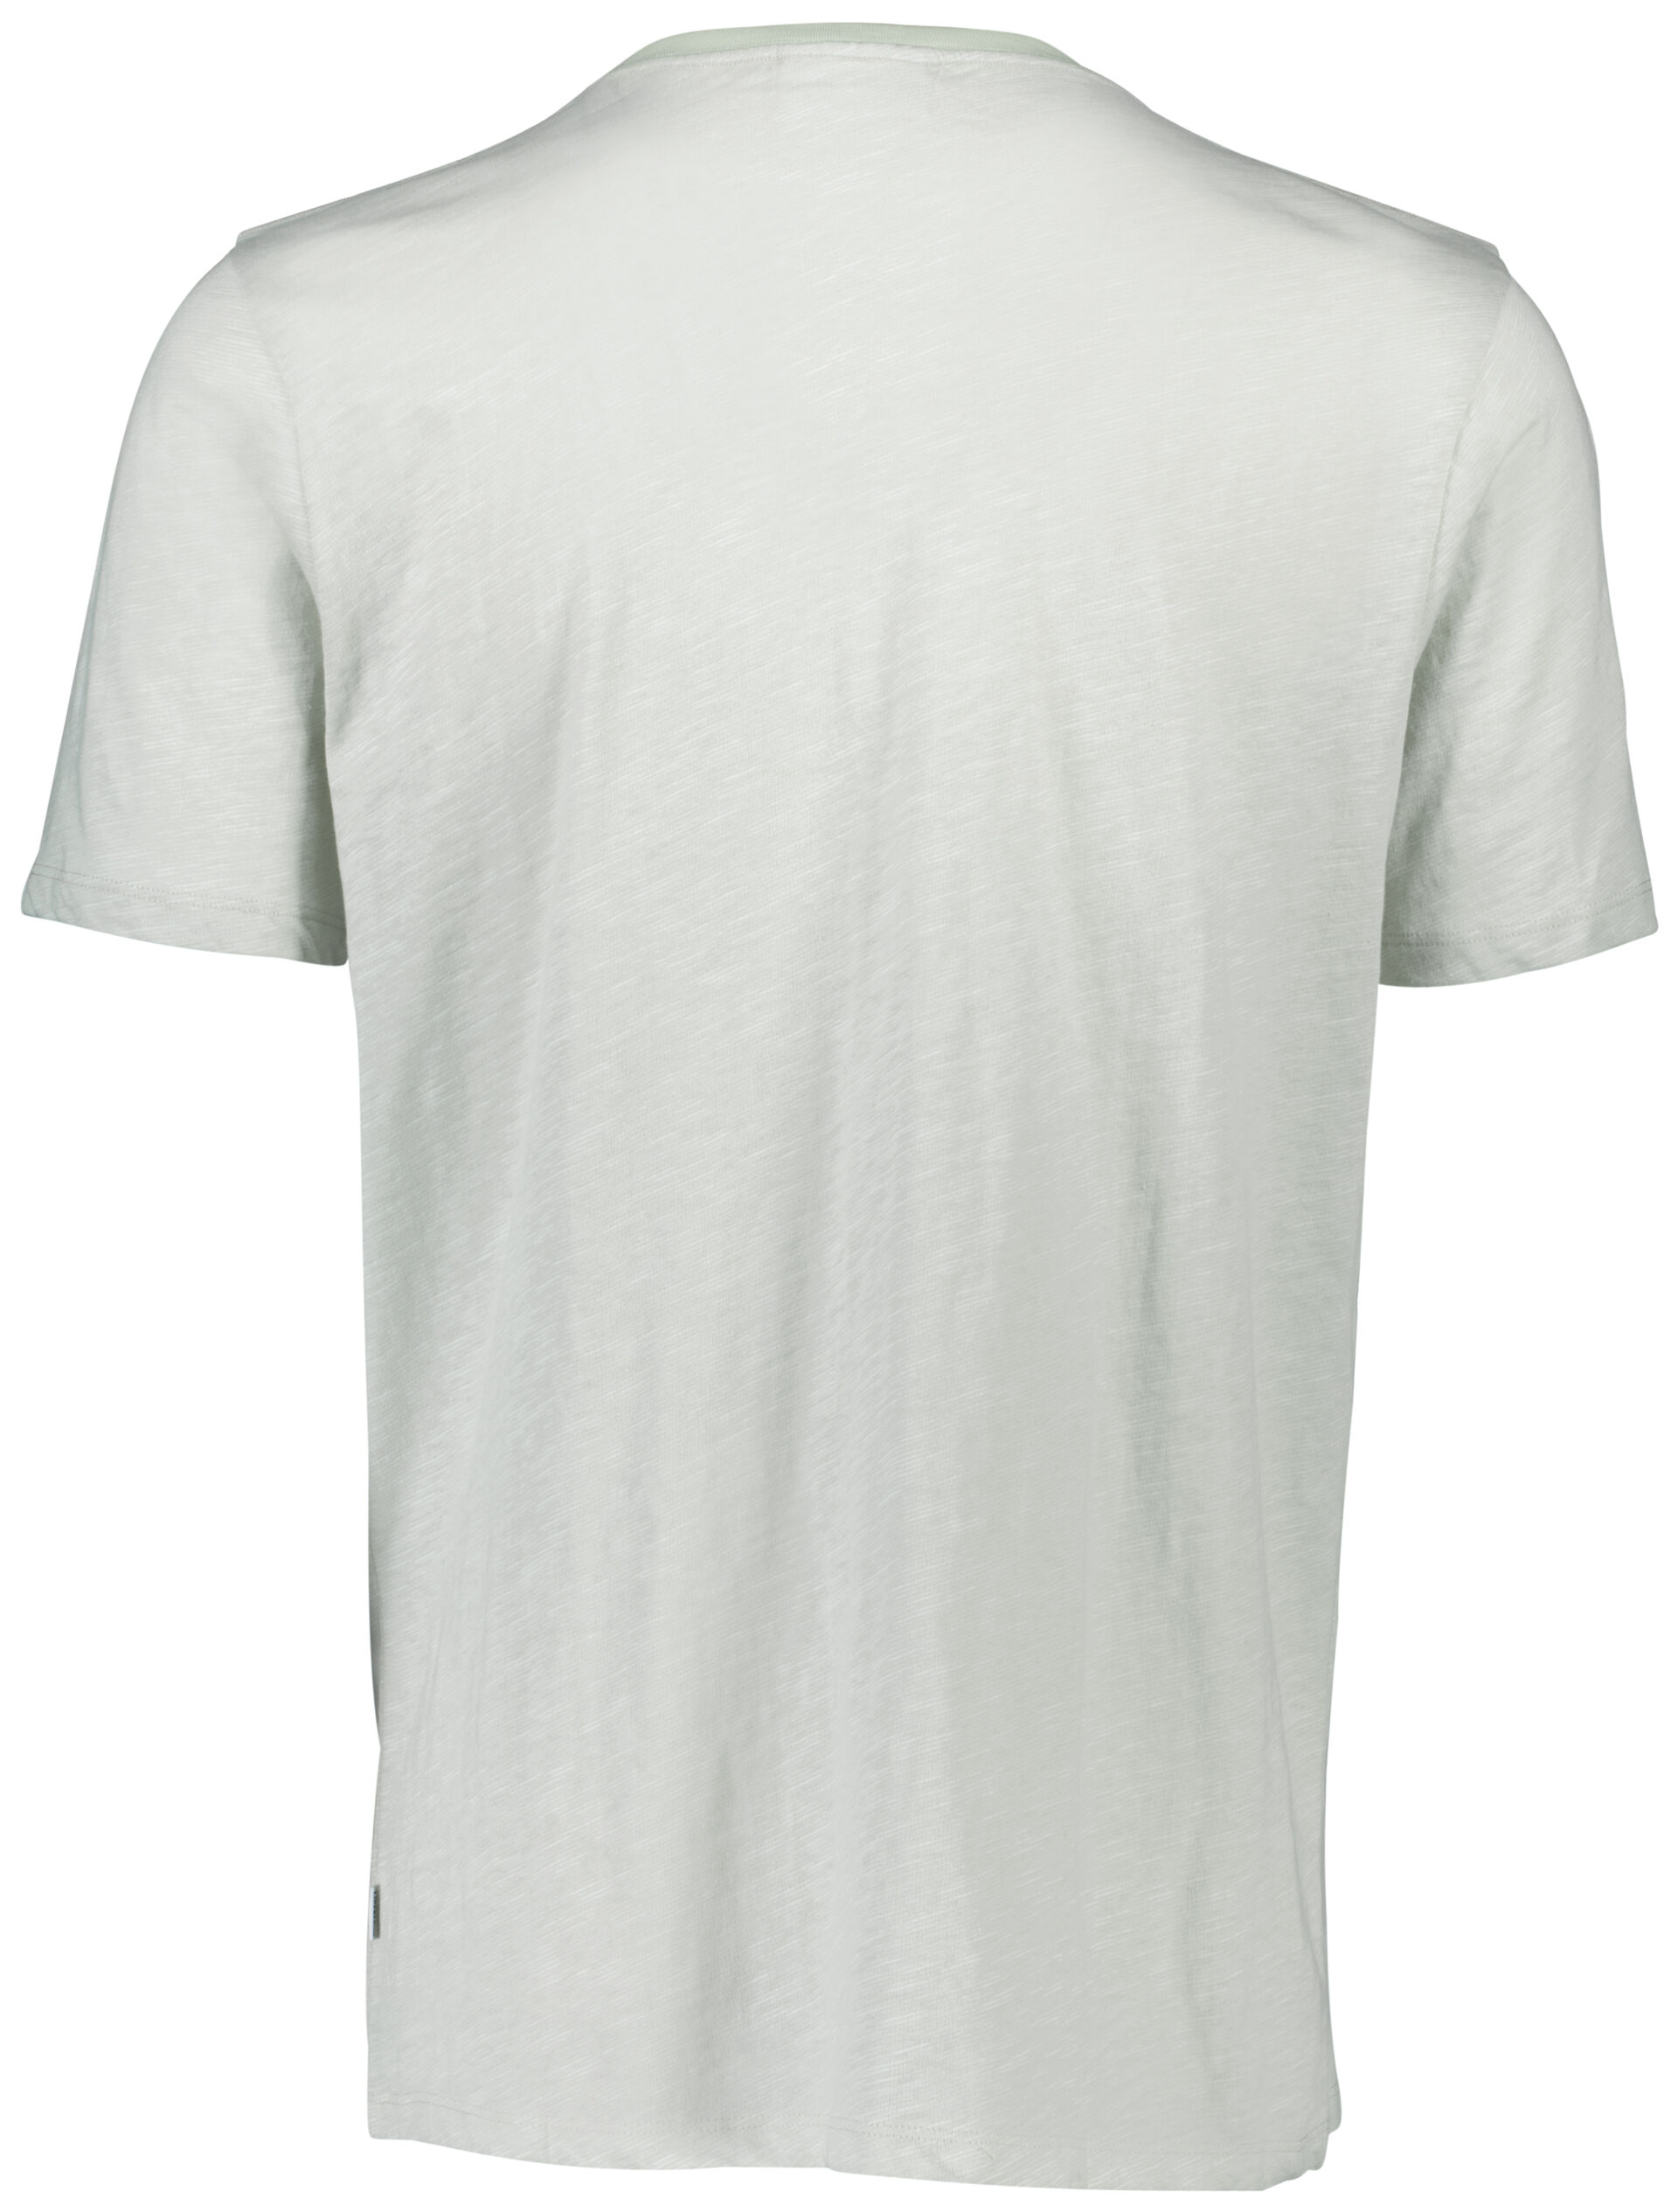 Lindbergh  T-shirt 30-400263